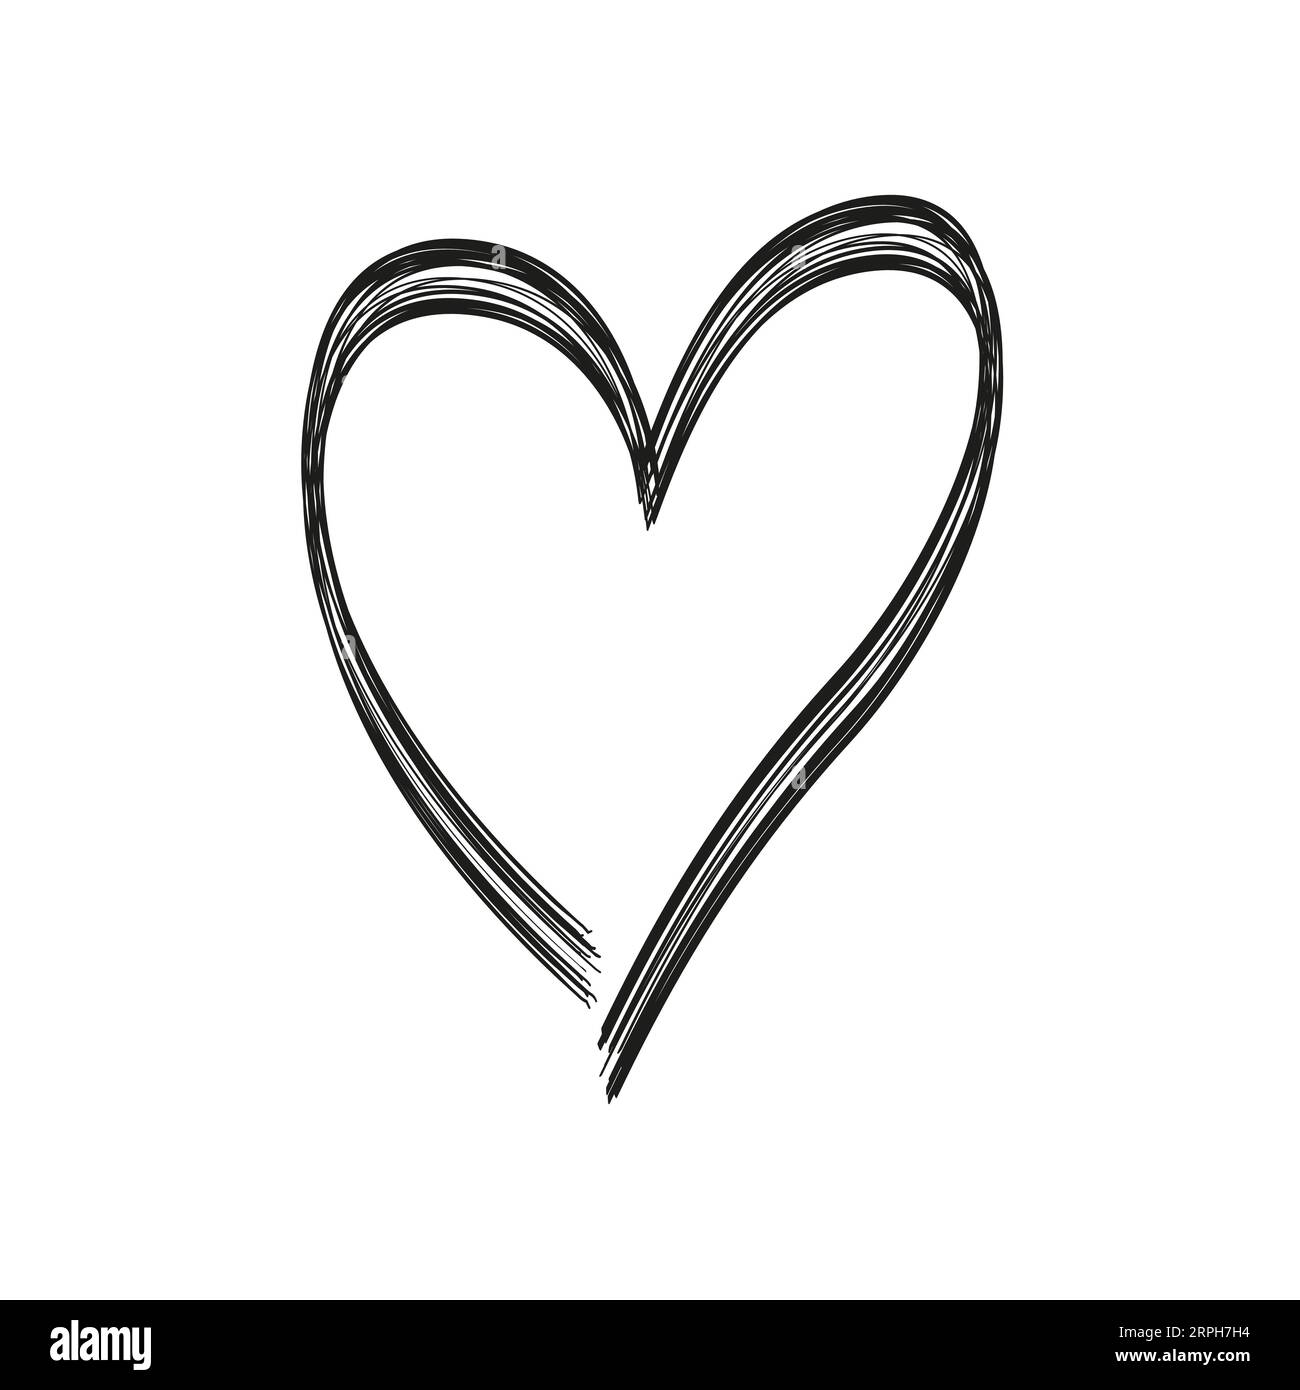 Mint Acrylic Brush Stroke In A Heart Shape Stock Illustration - Download  Image Now - Heart Shape, Teal, Brush Stroke - iStock